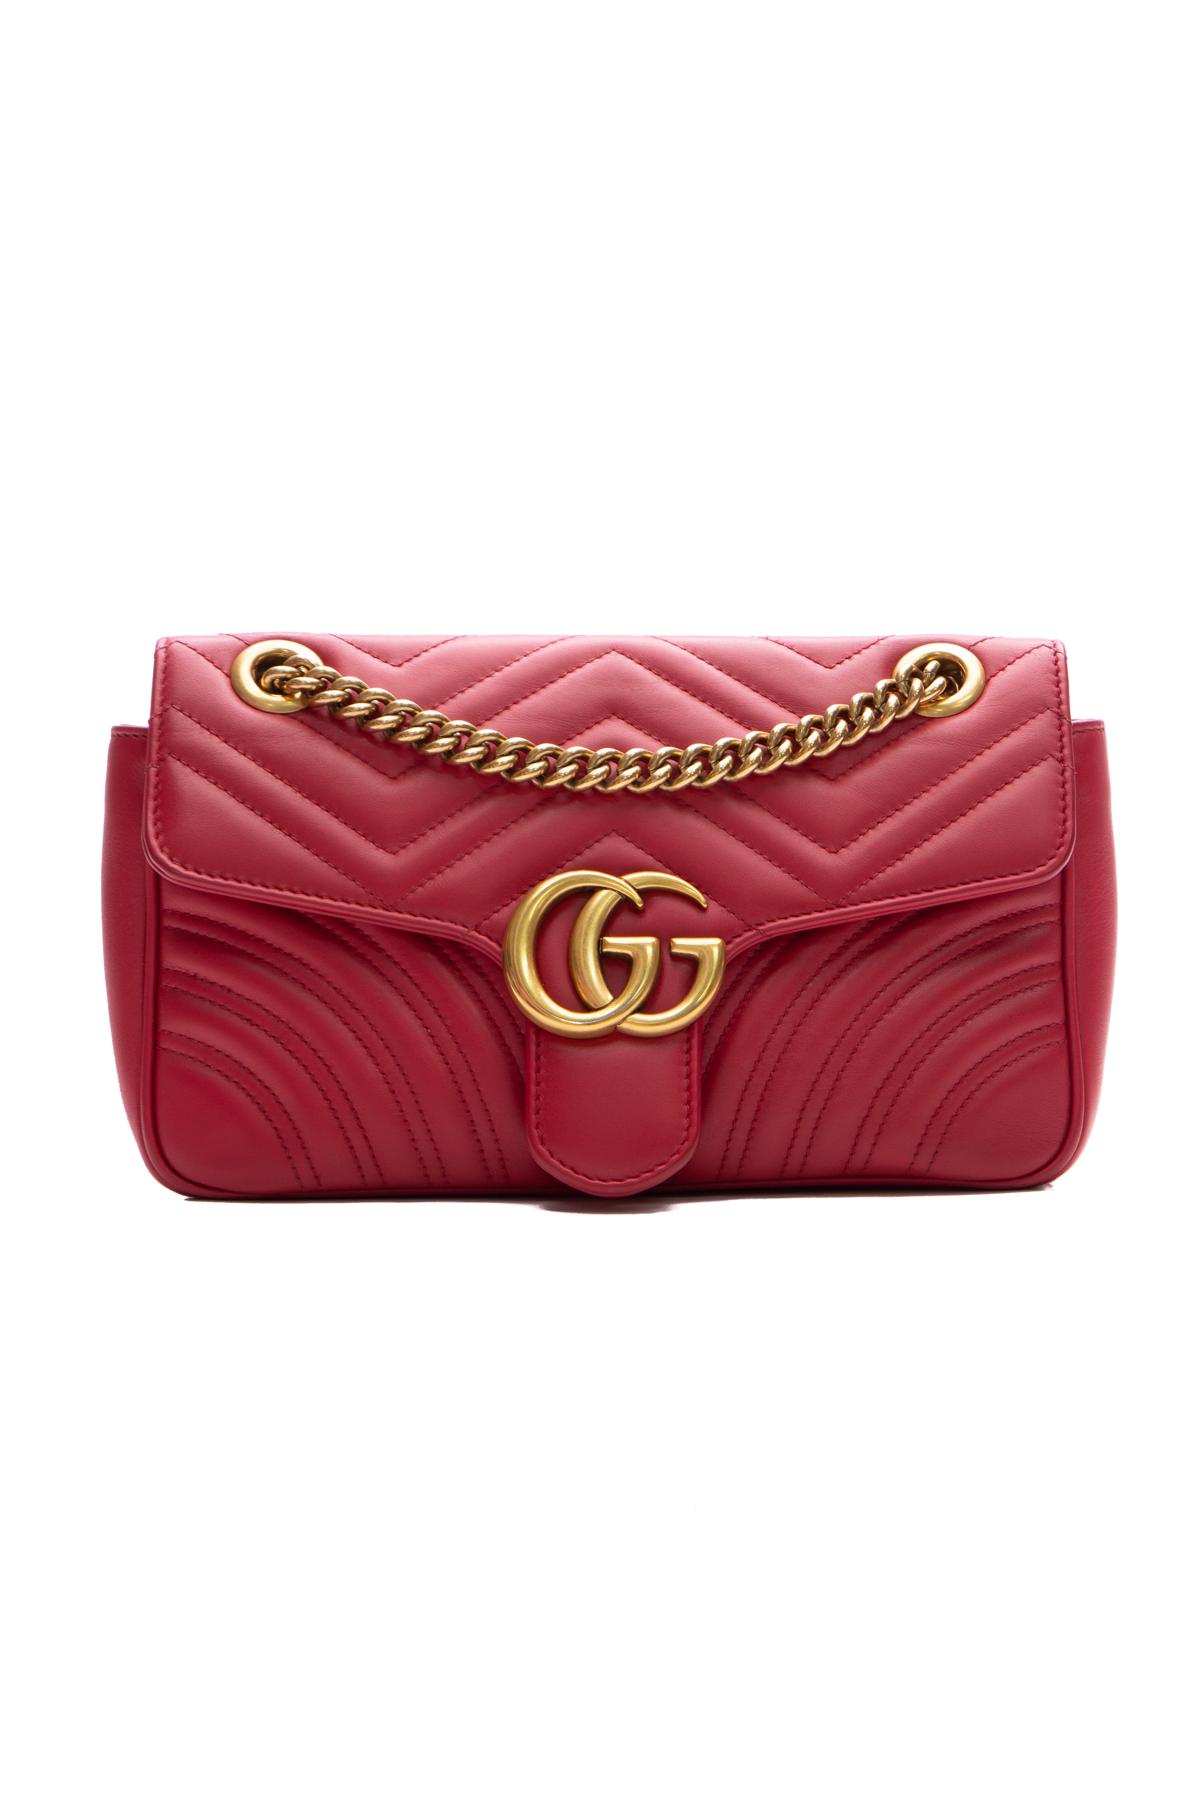 Gg marmont flap glitter handbag Gucci Green in Glitter - 39787909